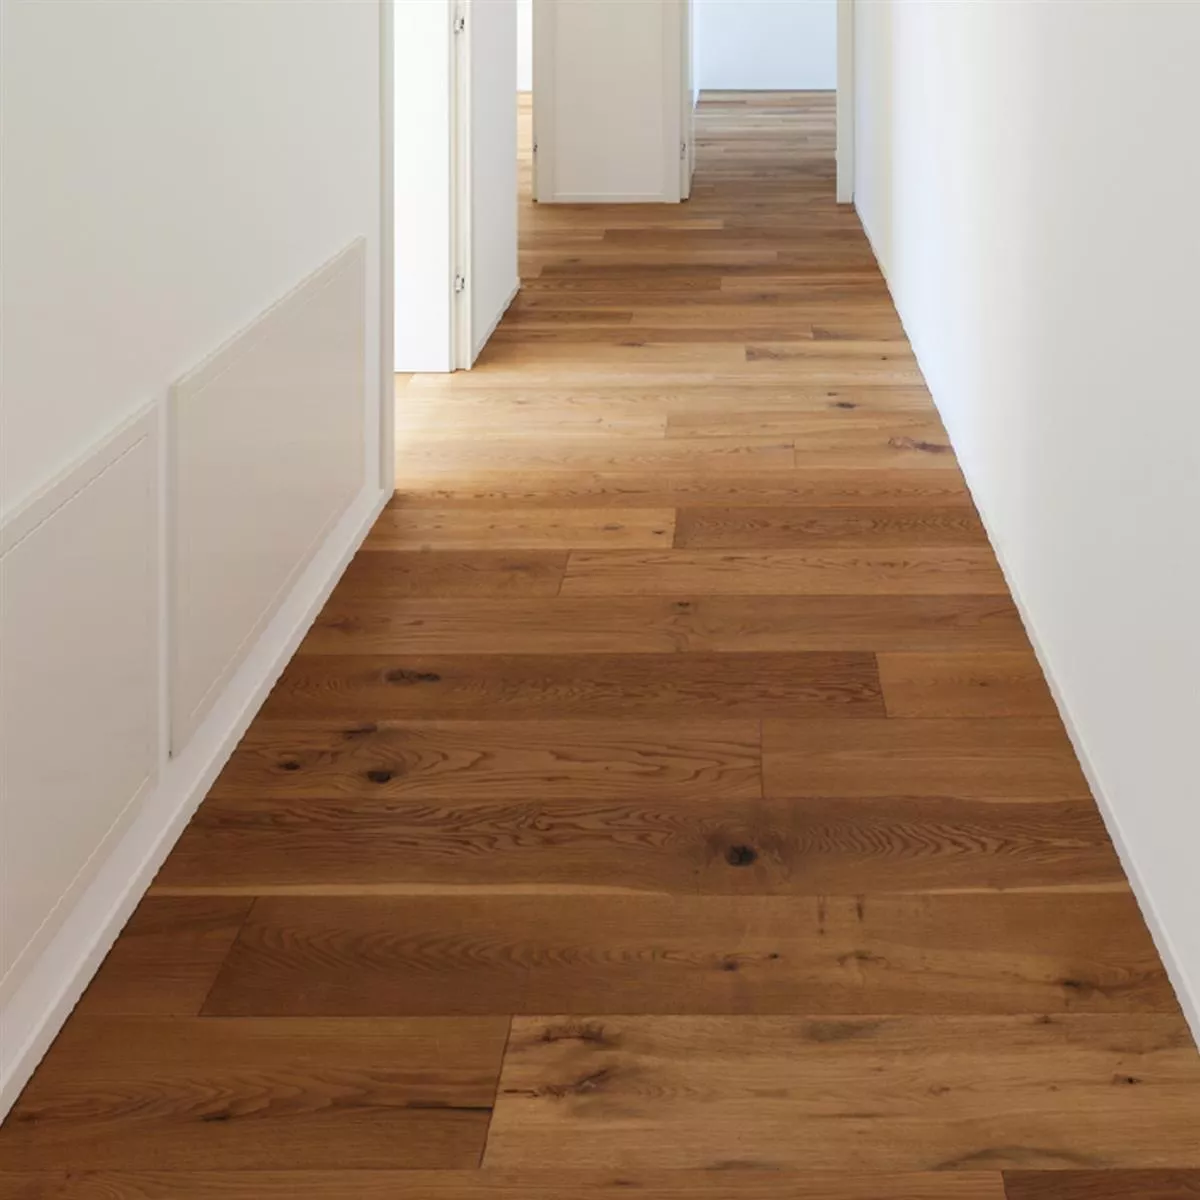 Sample Wood Optic Floor Tiles Colonia Walnuss 45x90cm